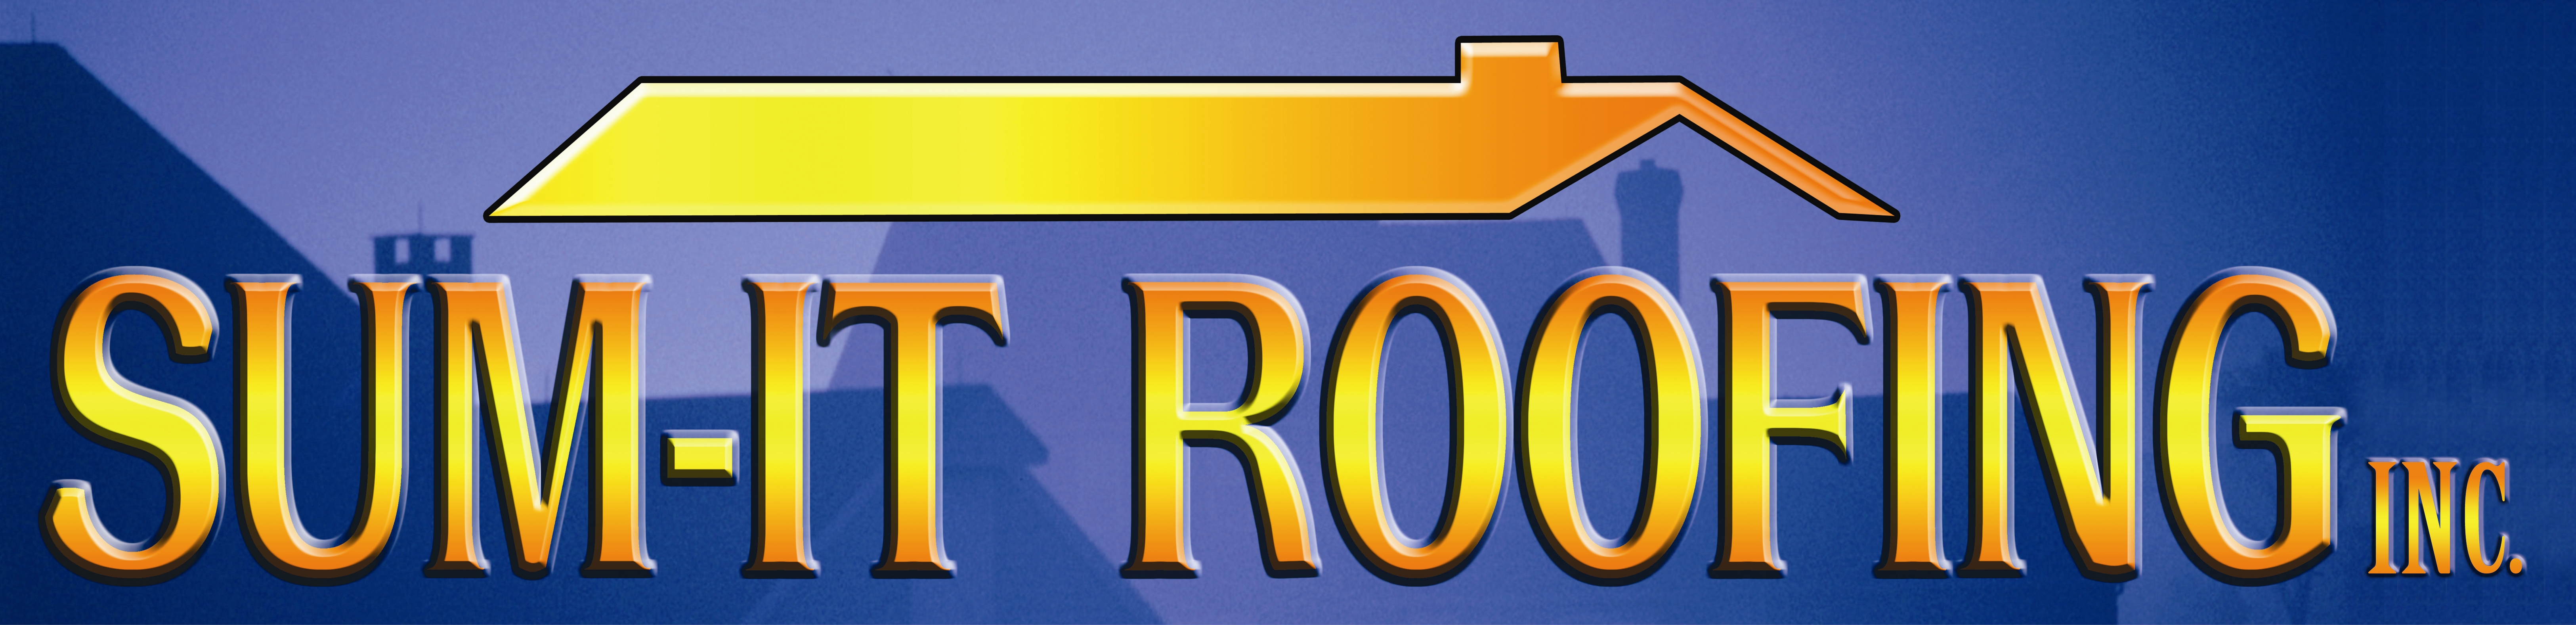 Sum It Roofing Inc's logo